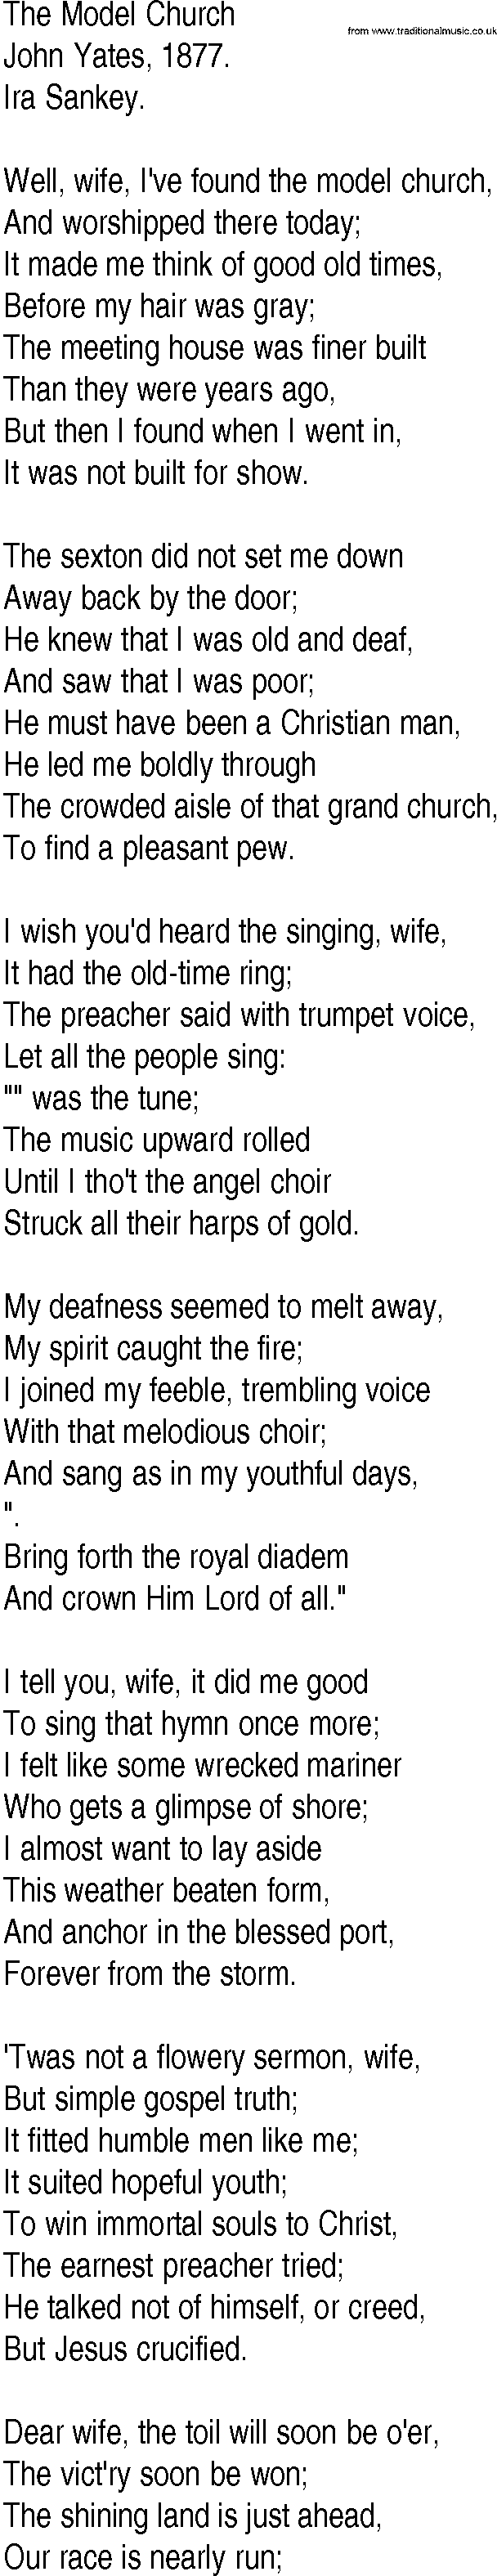 Hymn and Gospel Song: The Model Church by John Yates lyrics